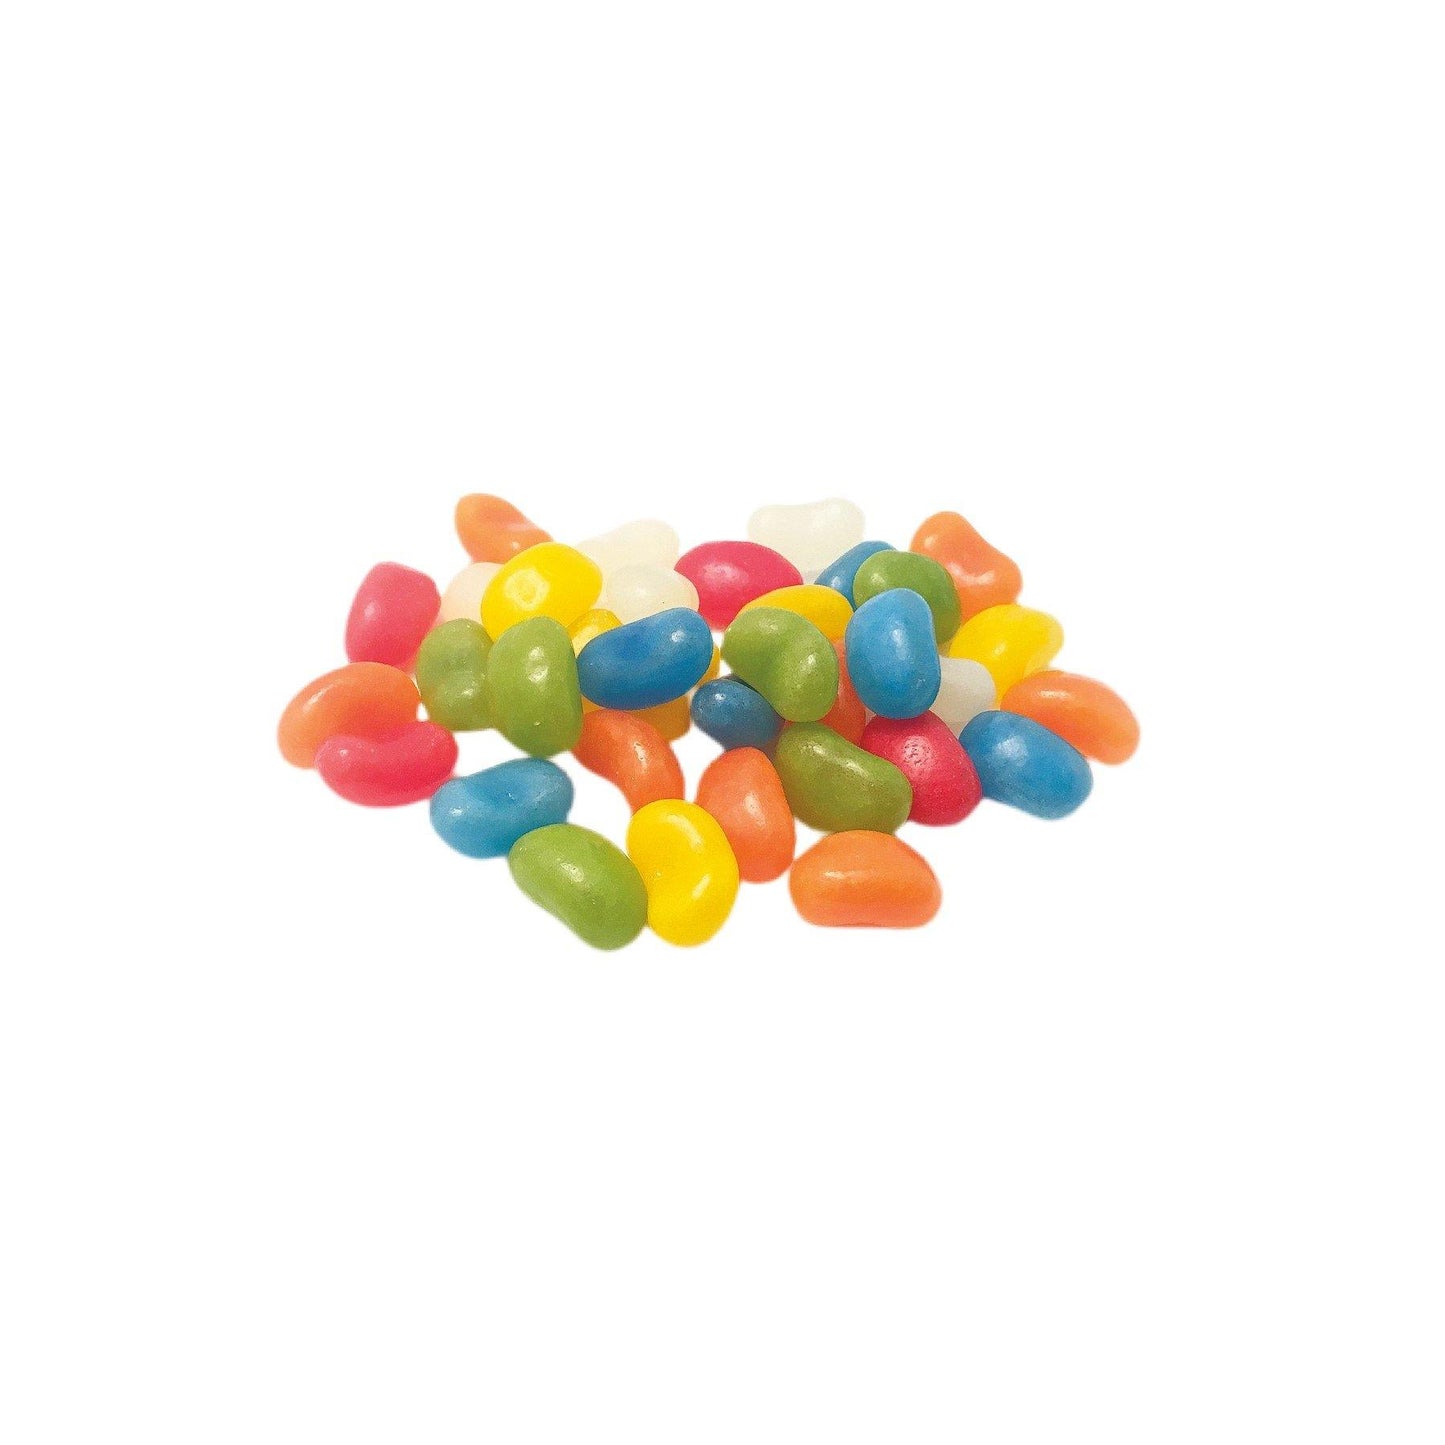 Jelly Beans Hexagonal Jar.